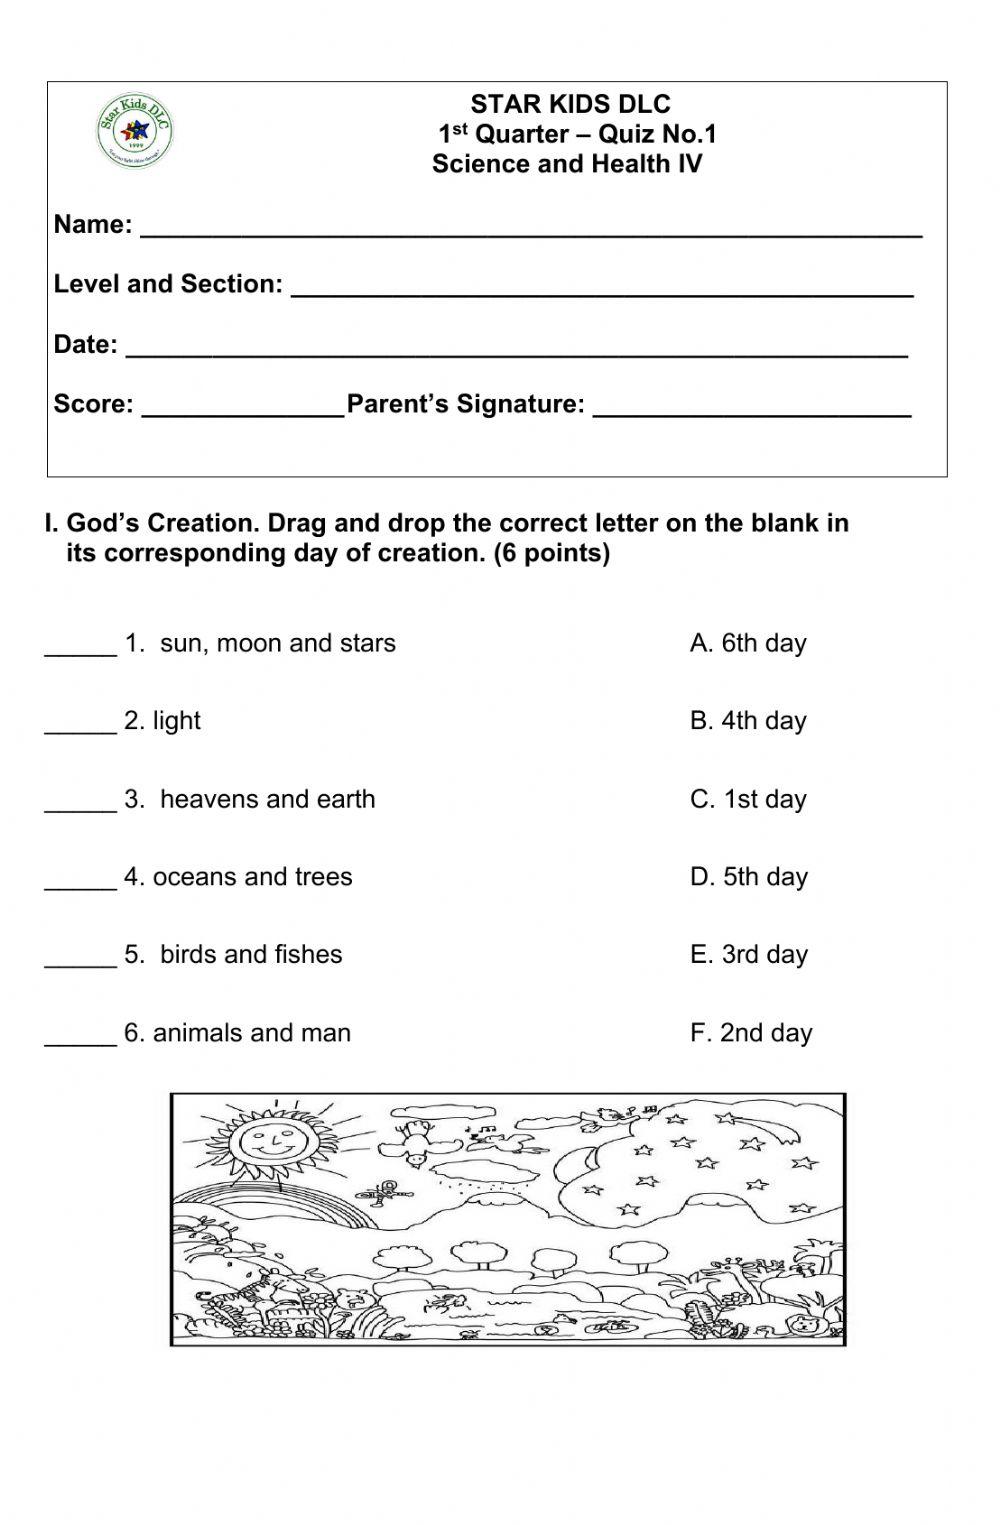 1st. Qtr. Quiz No. 1 Grade 4 - Science